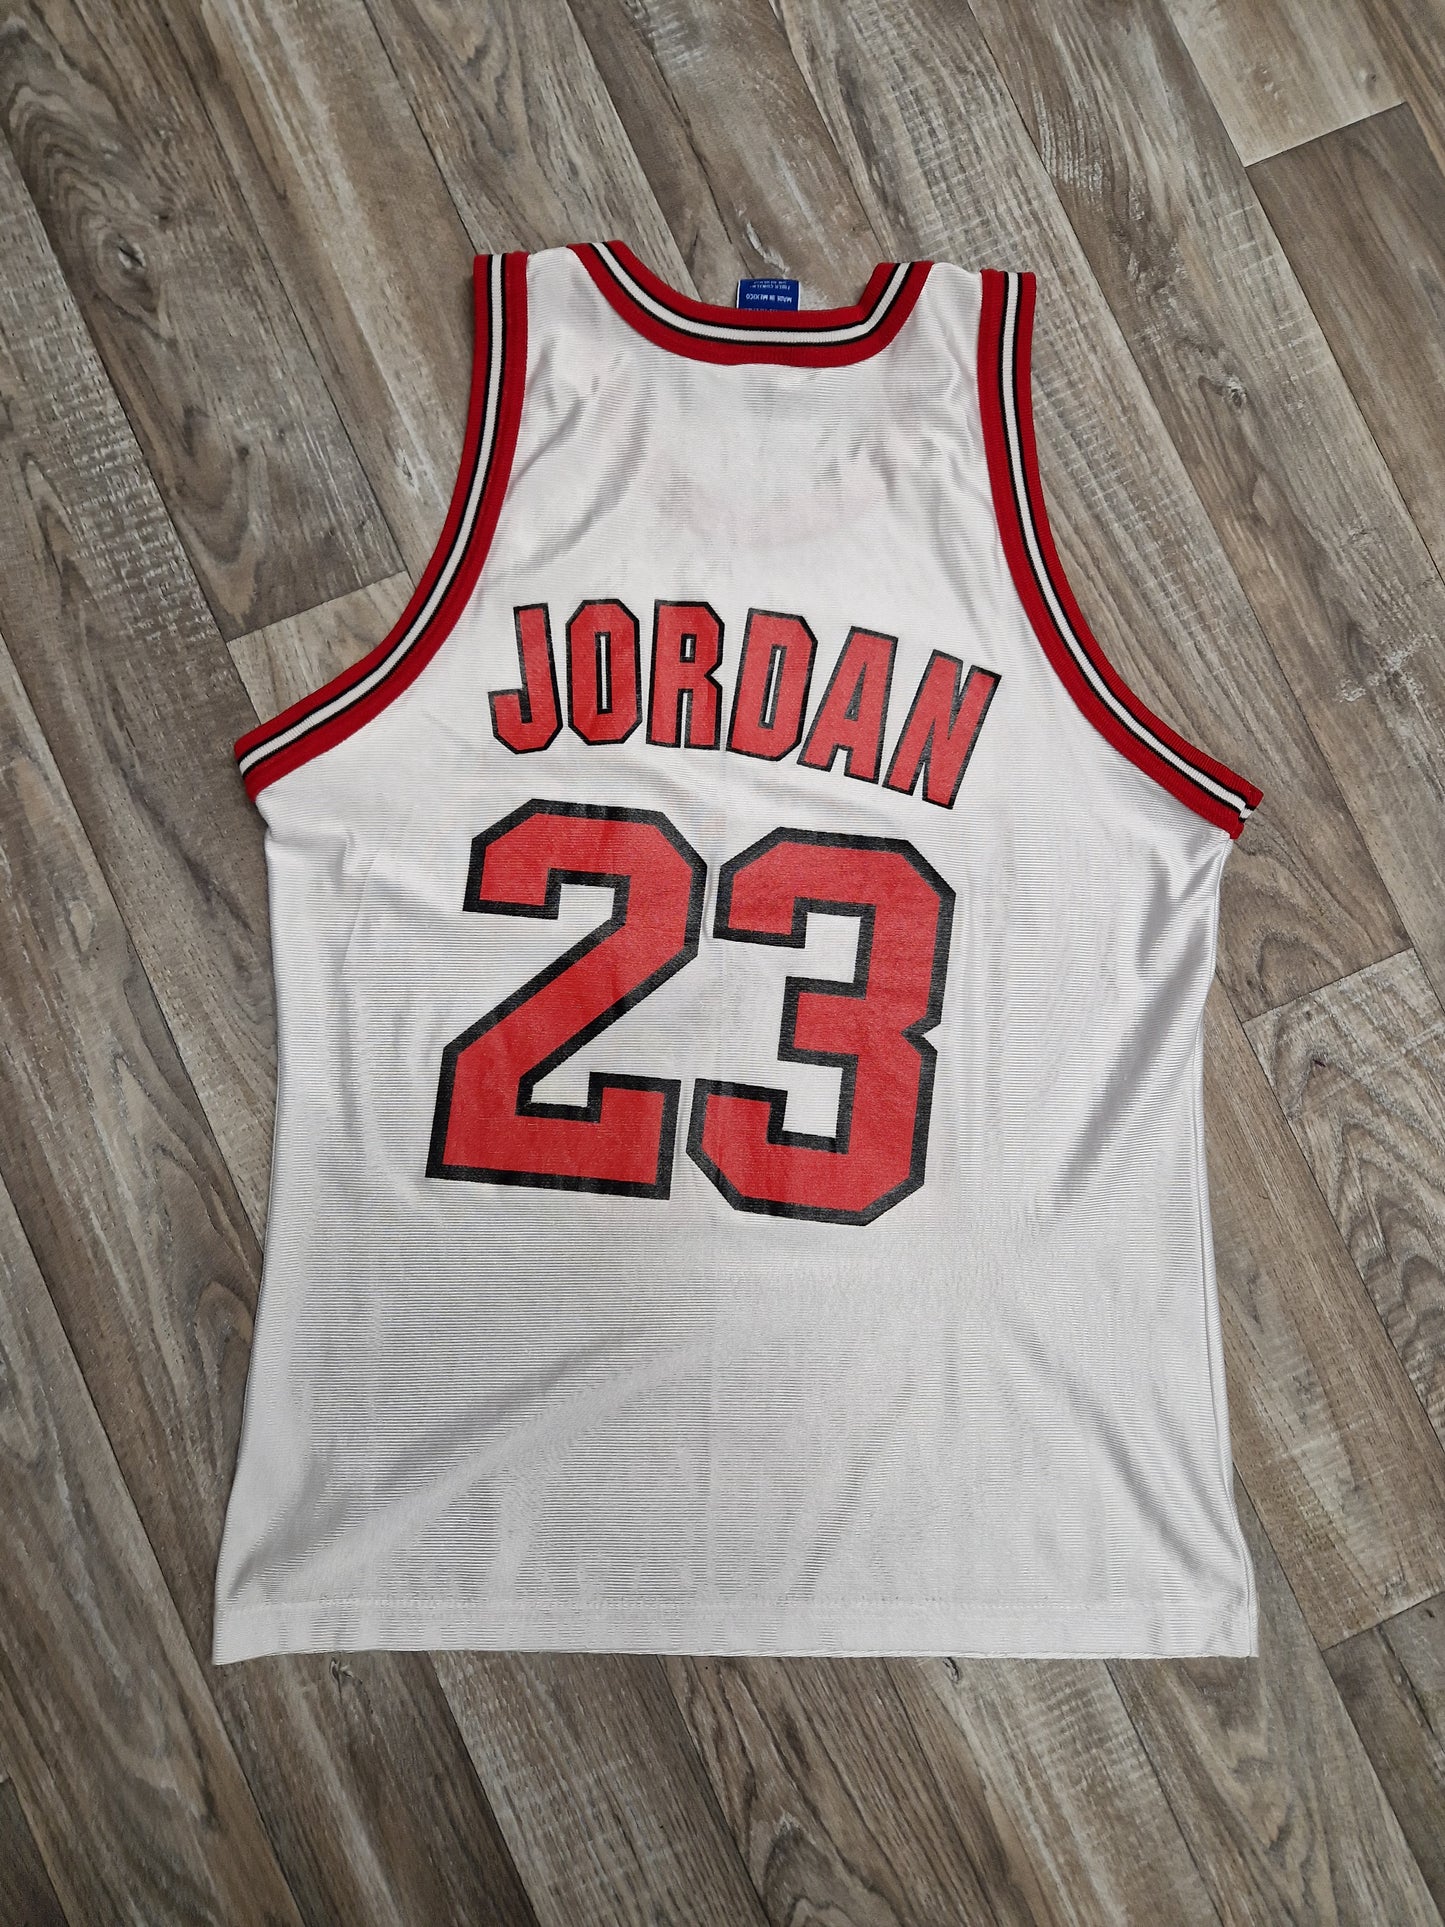 Michael Jordan Chicago Bulls Jersey Size Medium